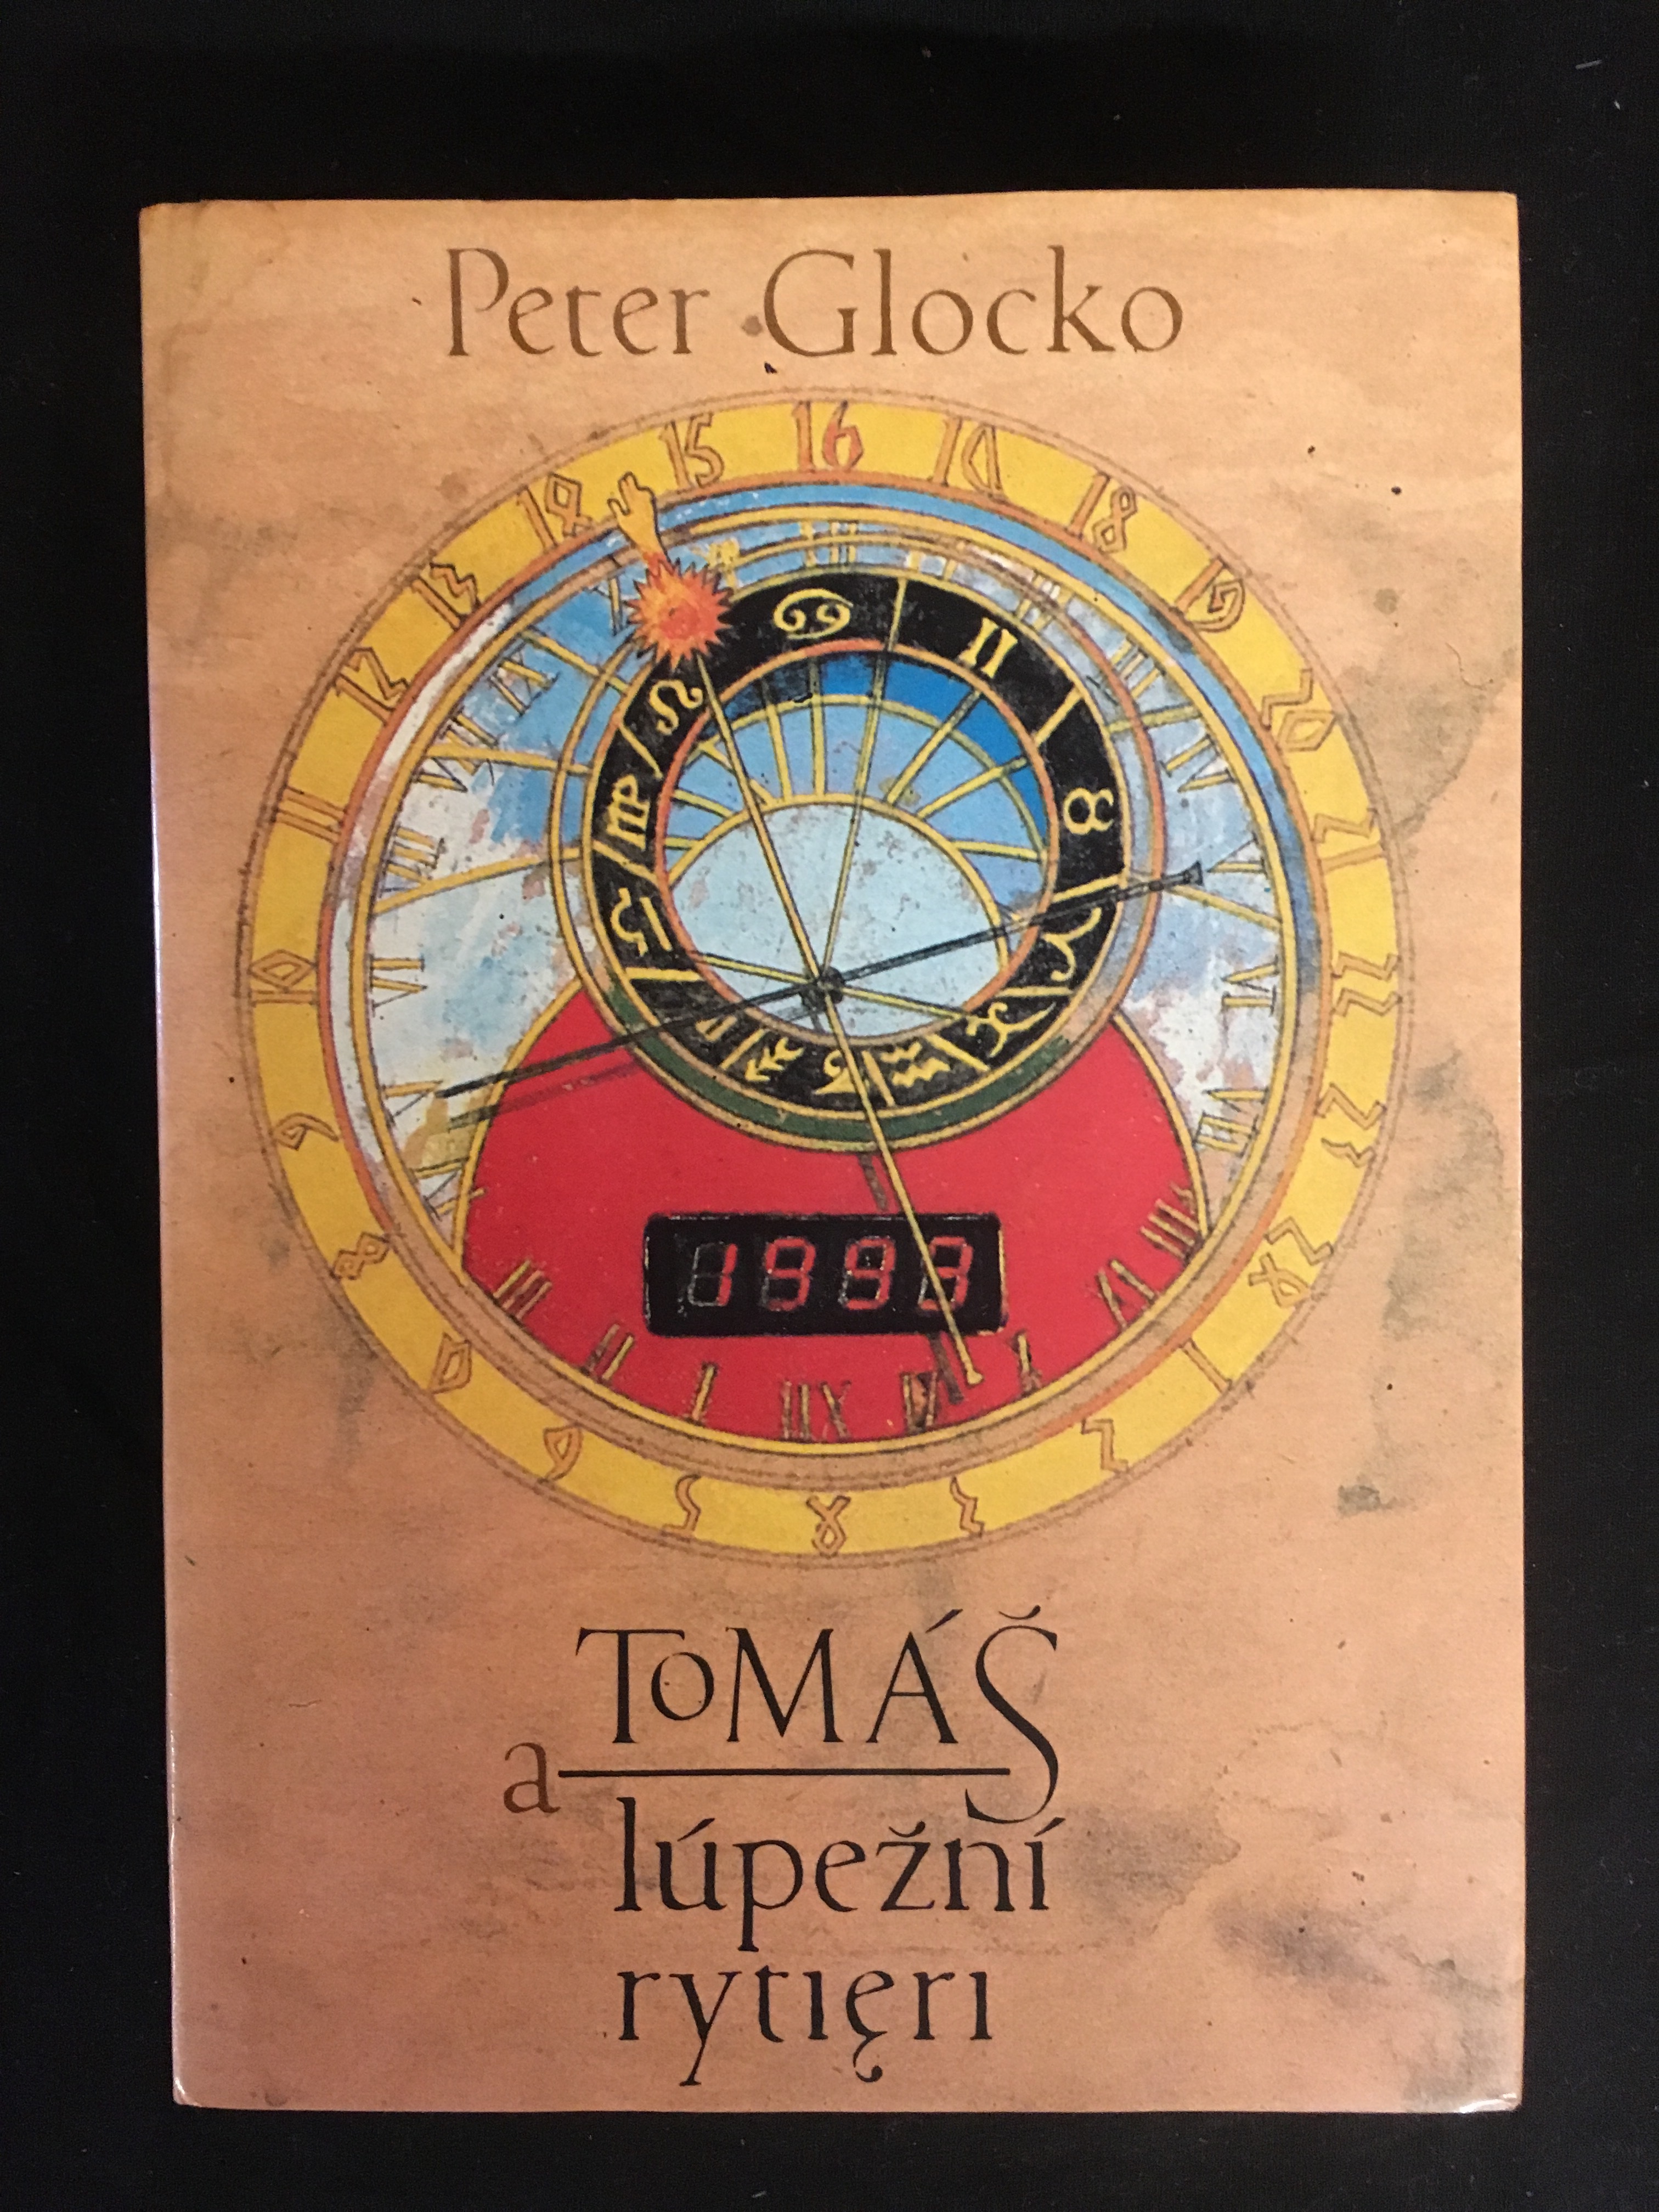 Peter Glocko-Tomáš a lúpežní rytieri